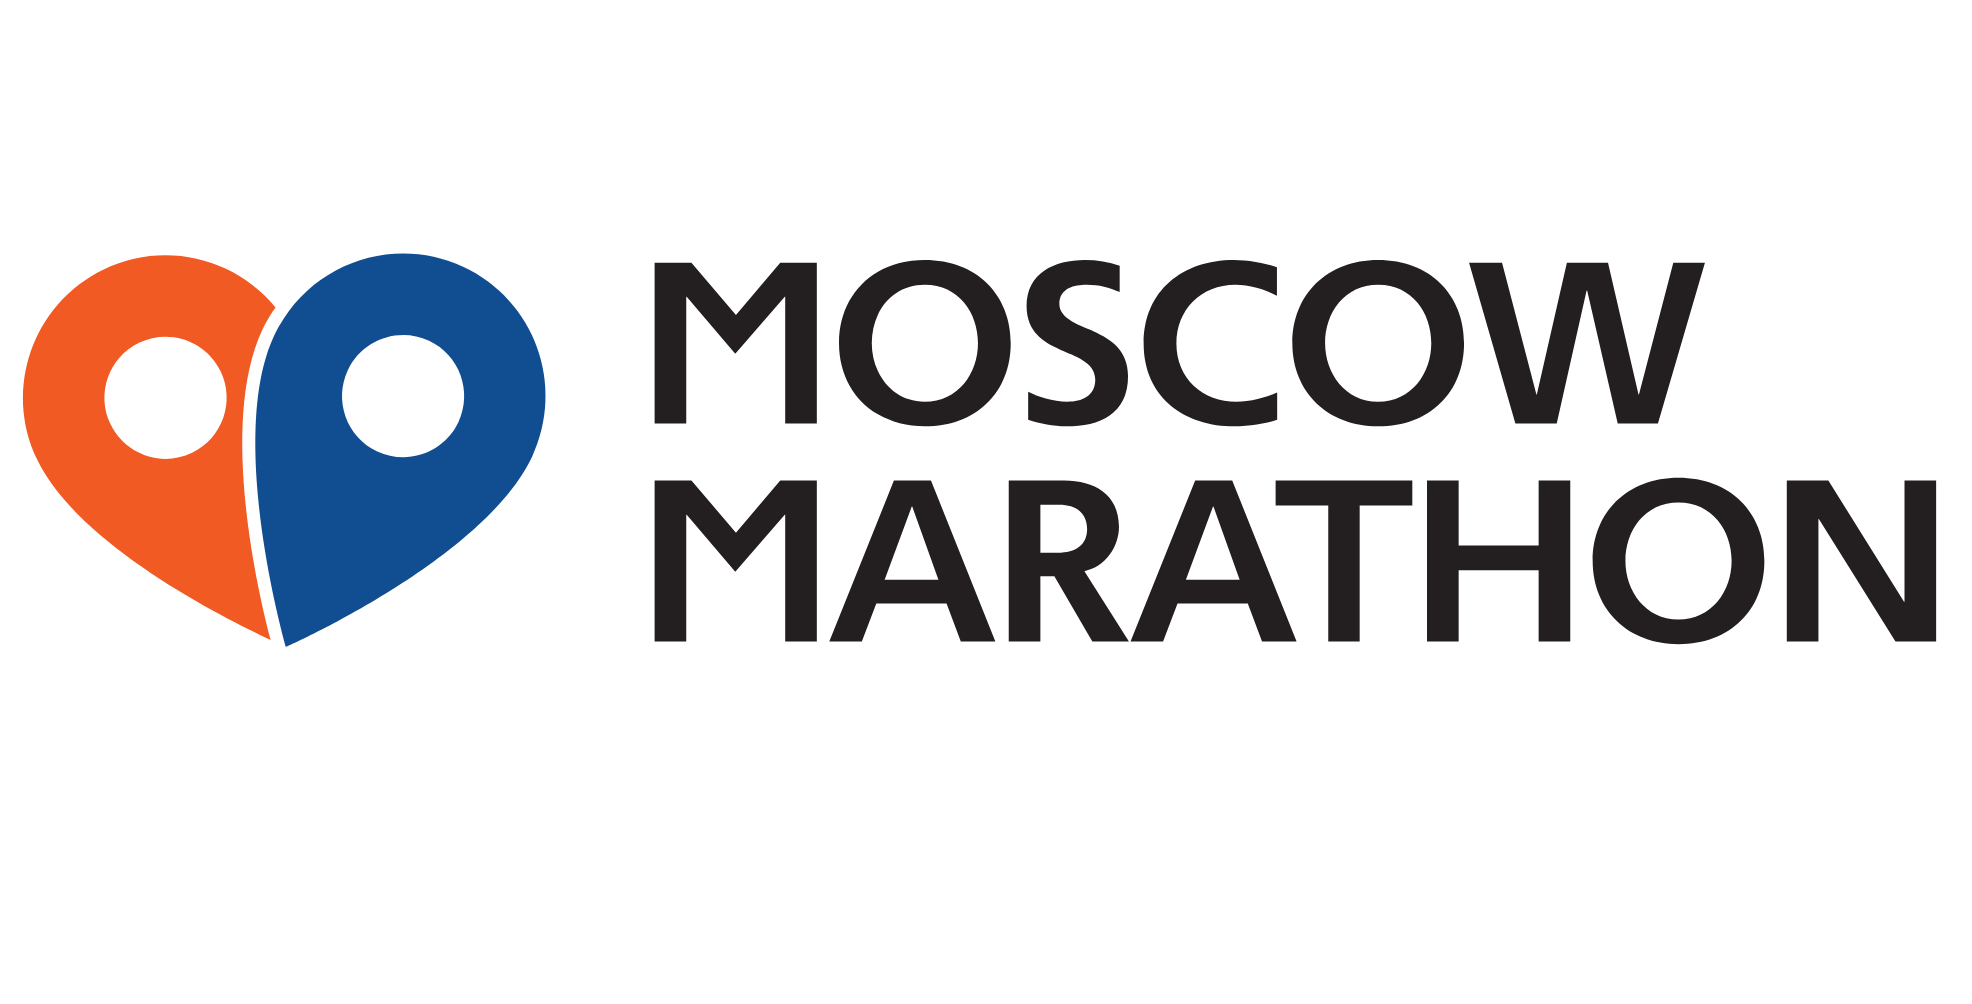 Moscow Marathon logo on RaceRaves